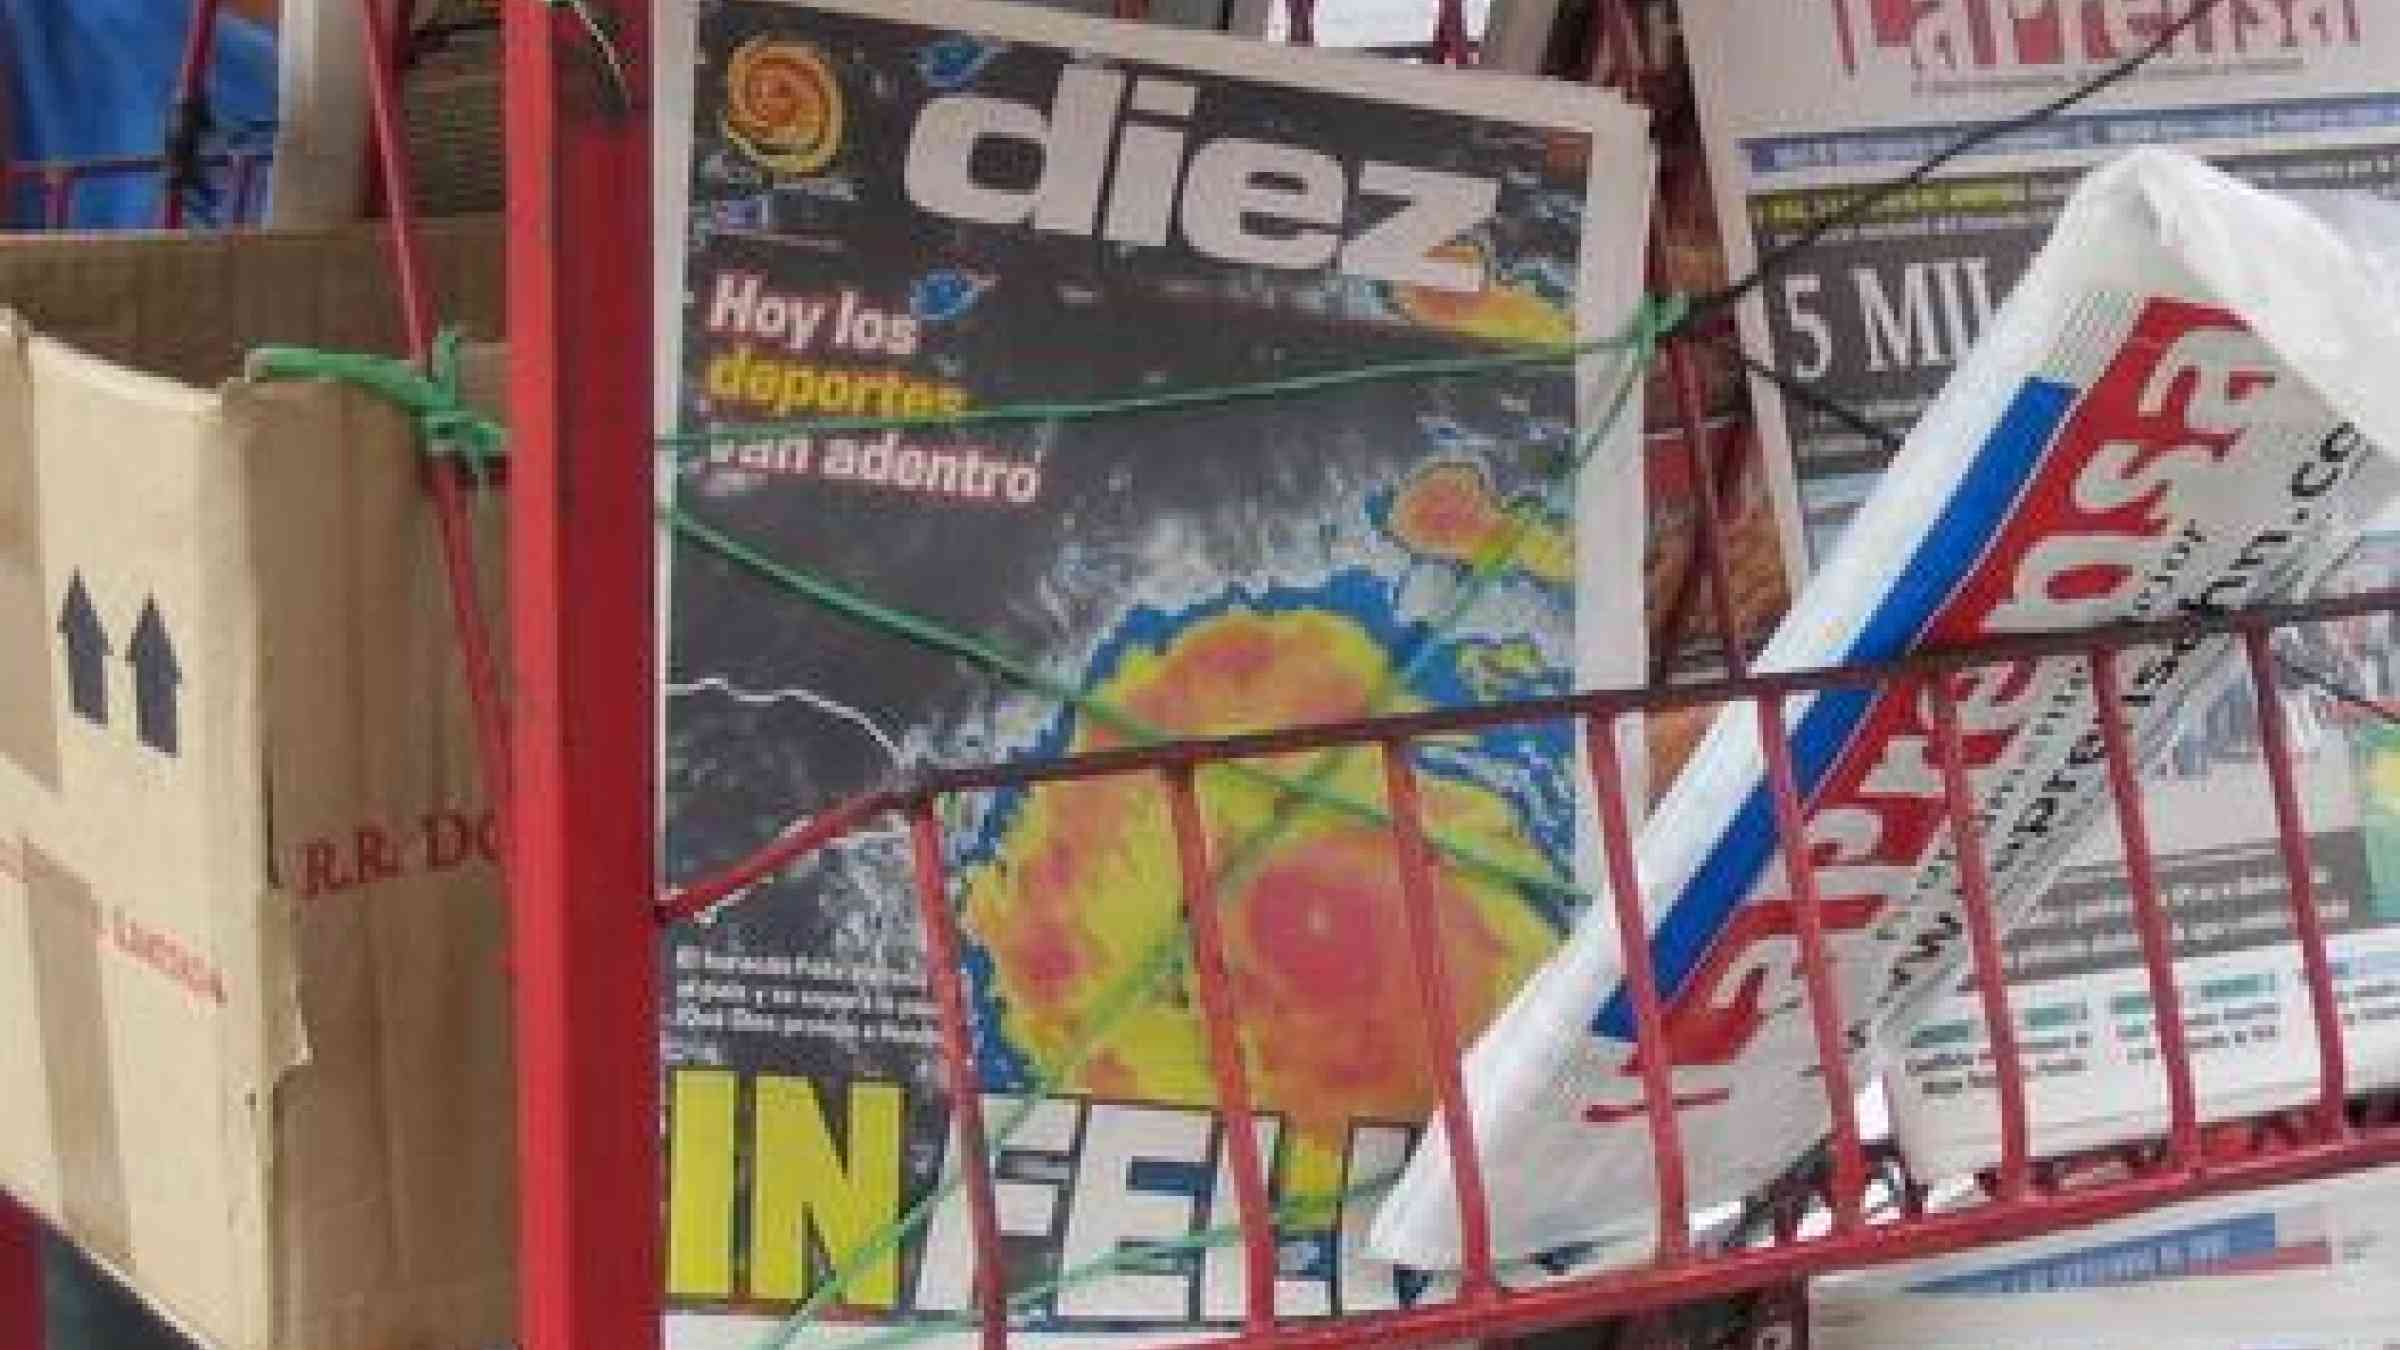 Honduras newspaper warning of Hurricane Felix in 2007.